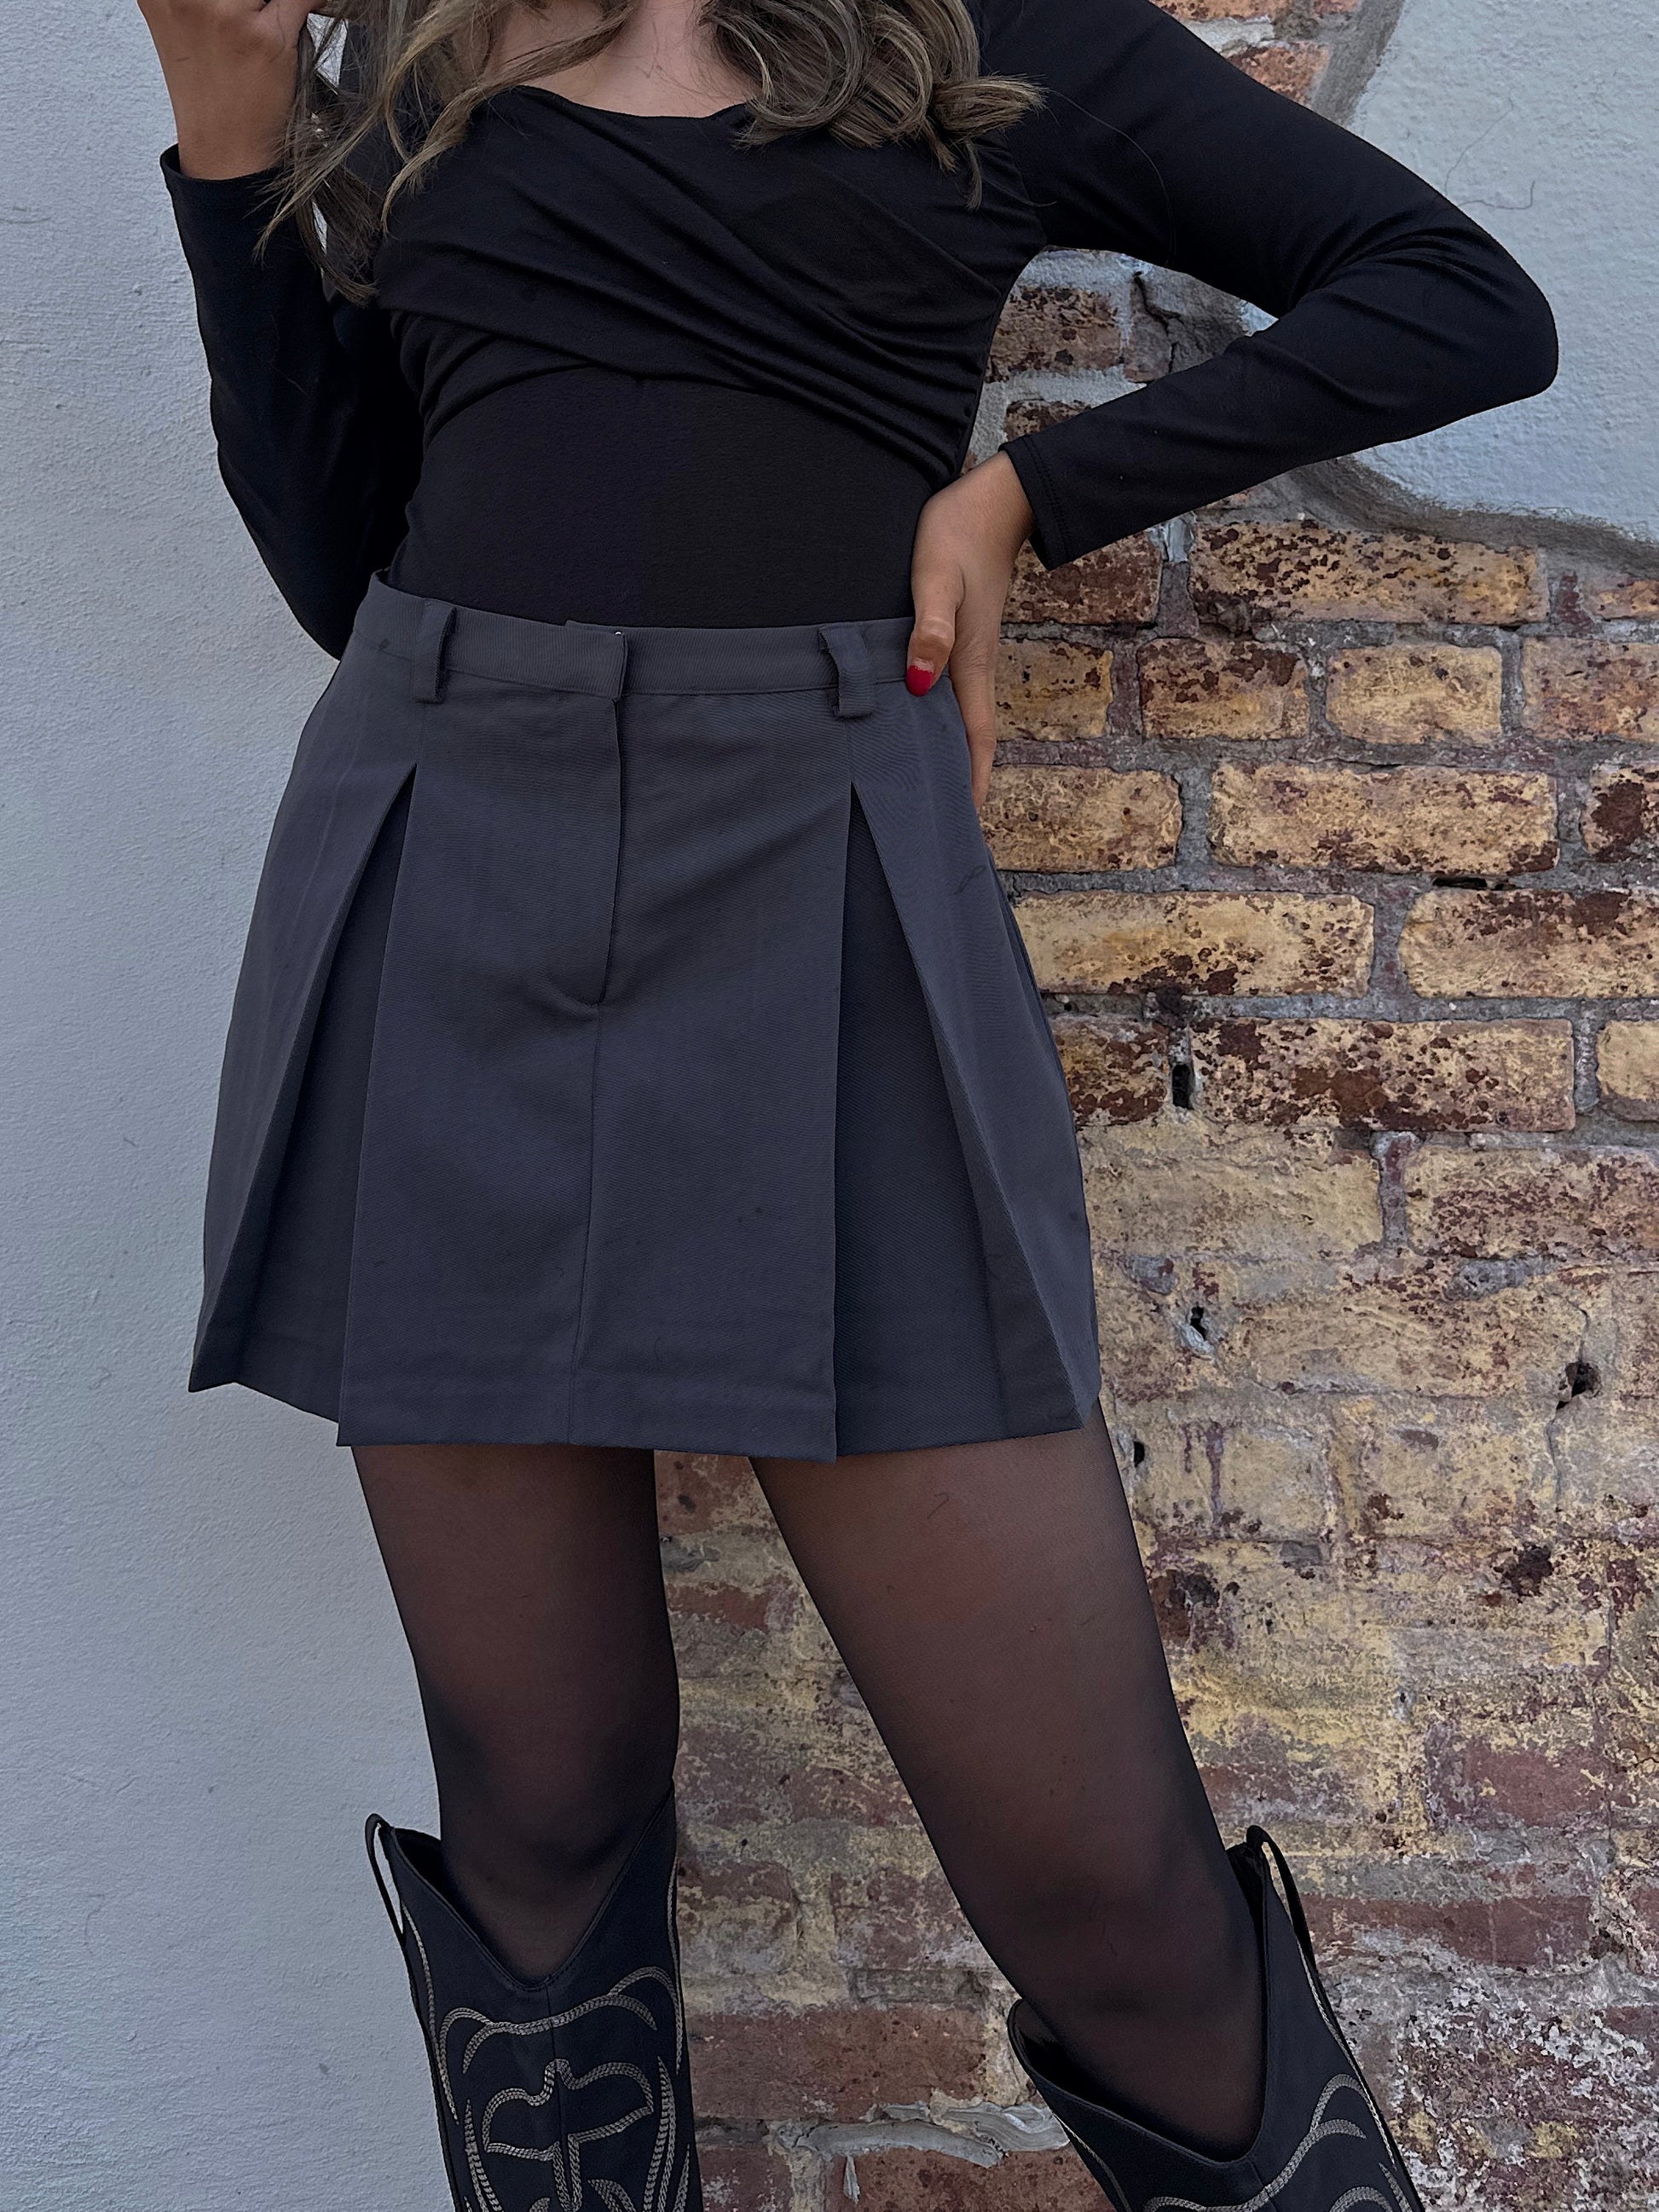 Slate Grey Mini Skirt - Snag